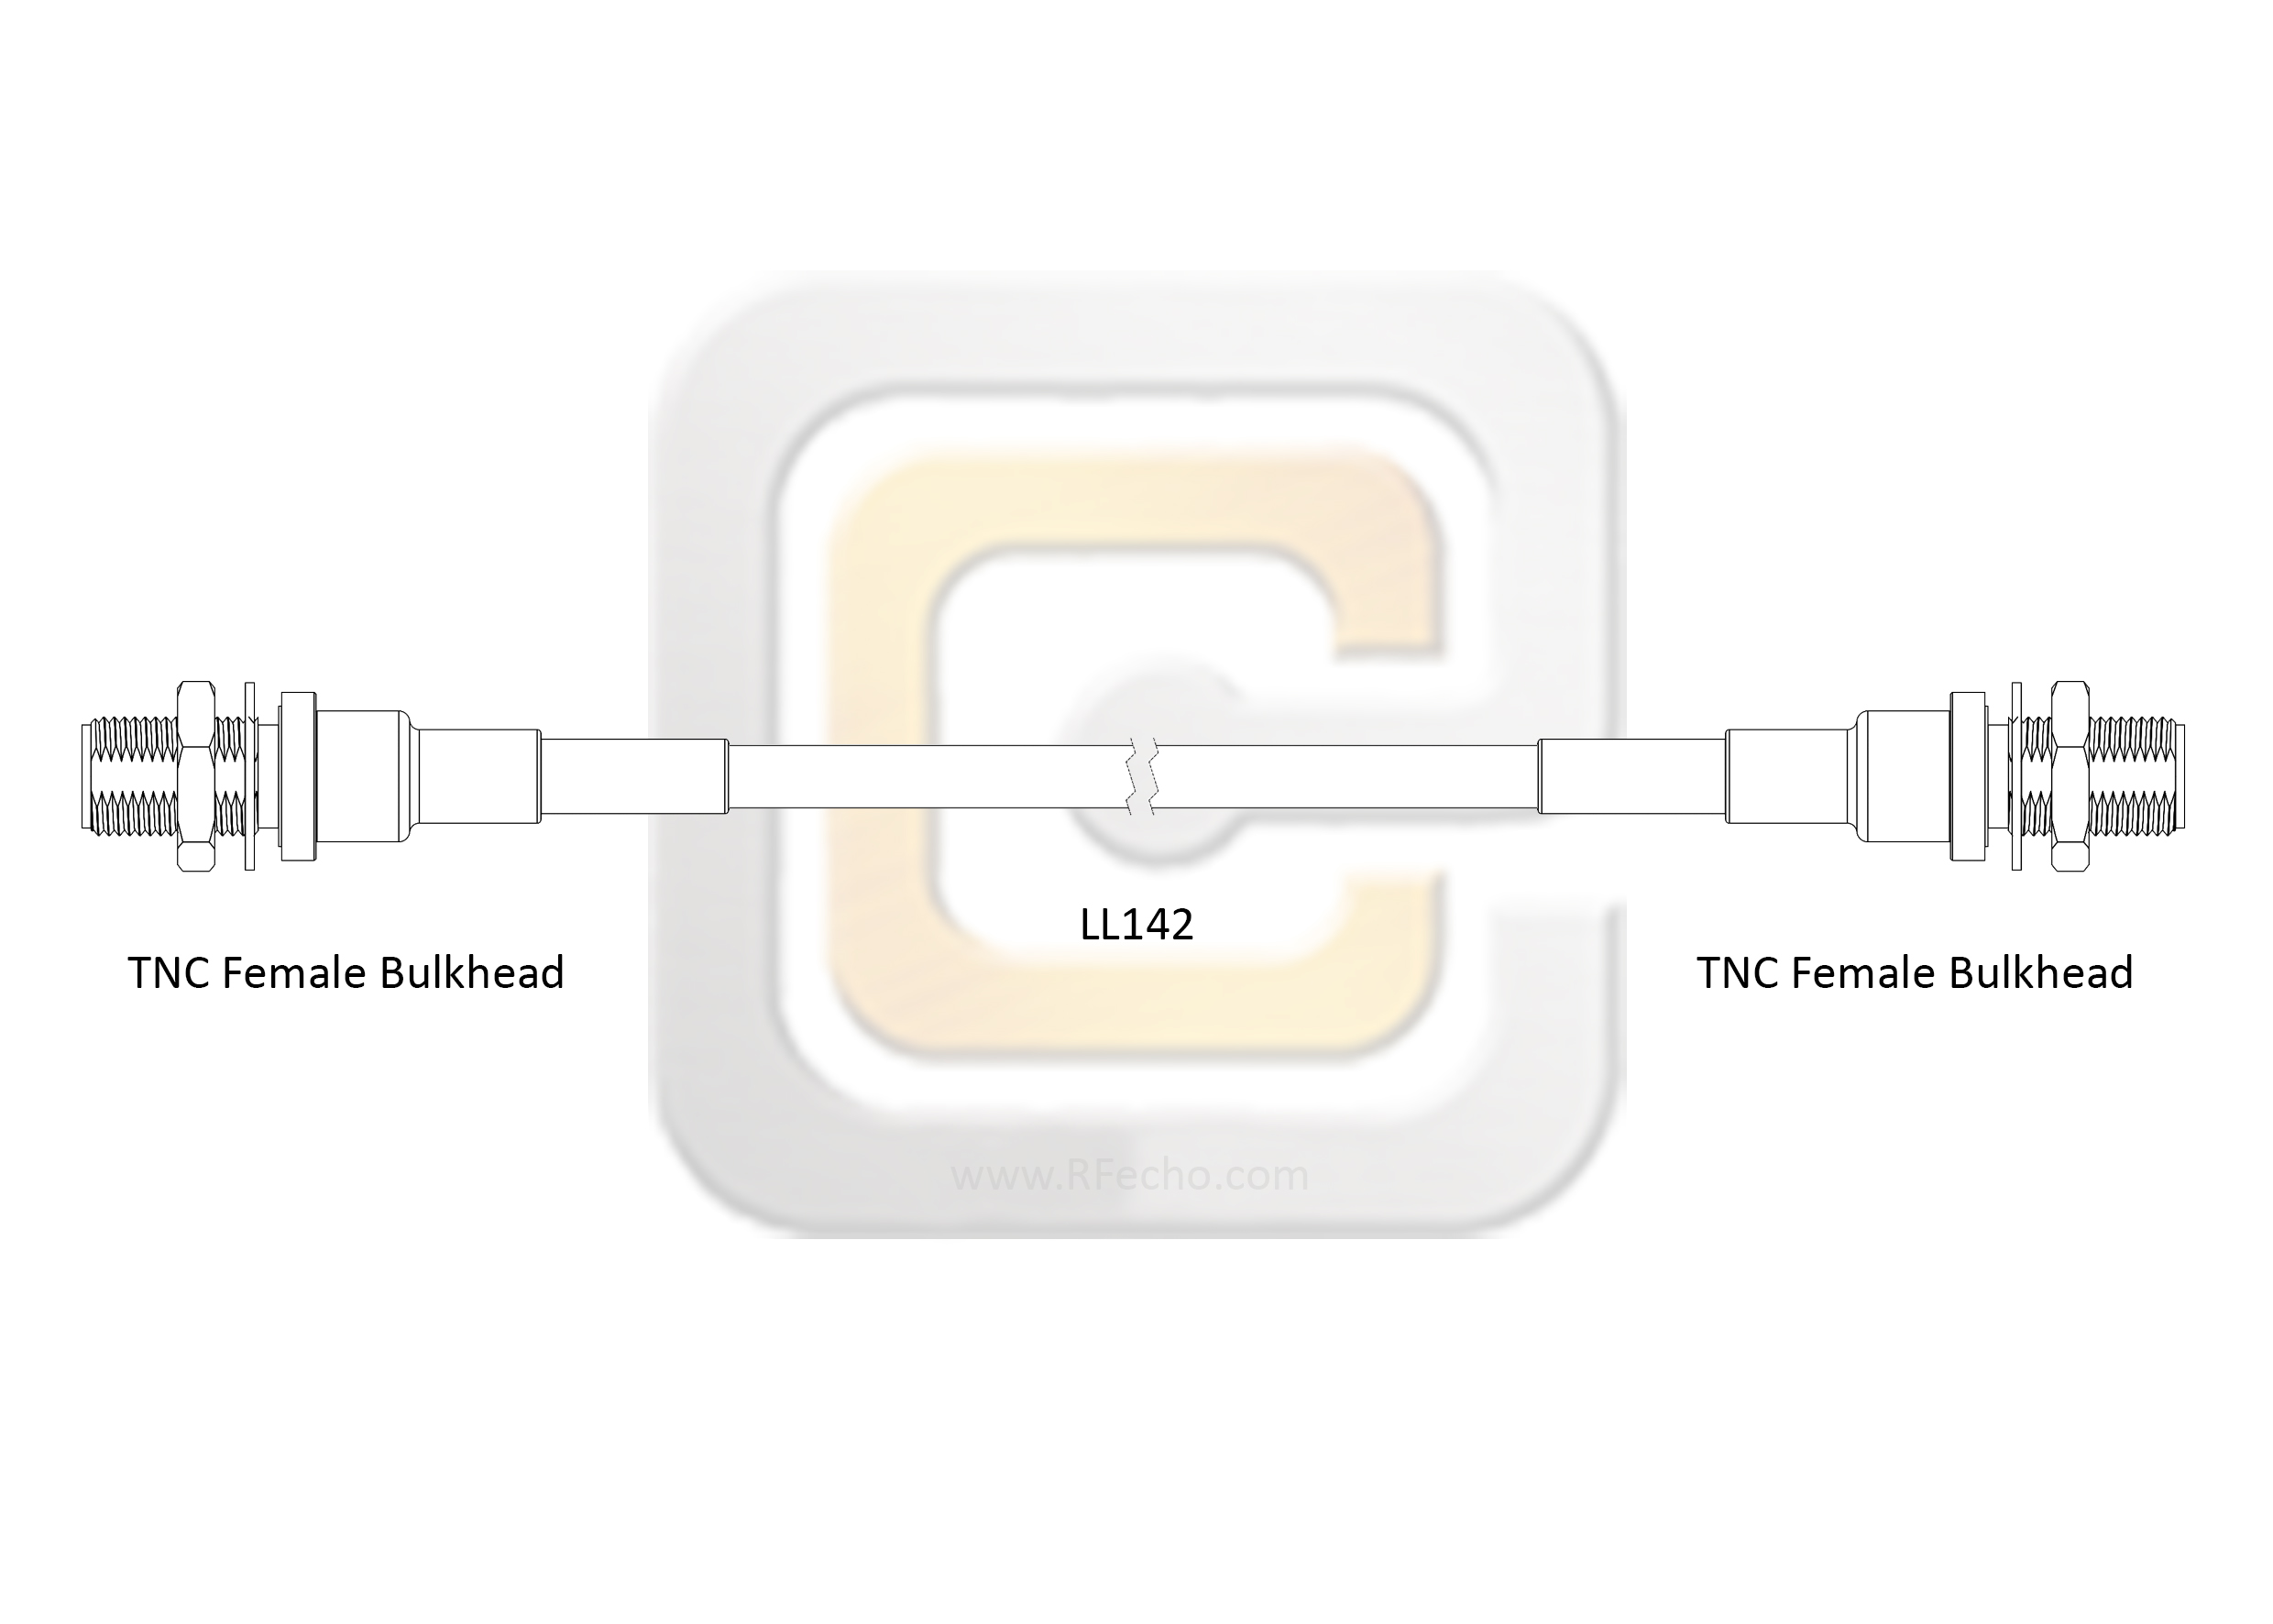 Low Loss TNC Female Bulkhead to TNC Female Bulkhead, 11 GHz, composite LL142 Coax and RoHS